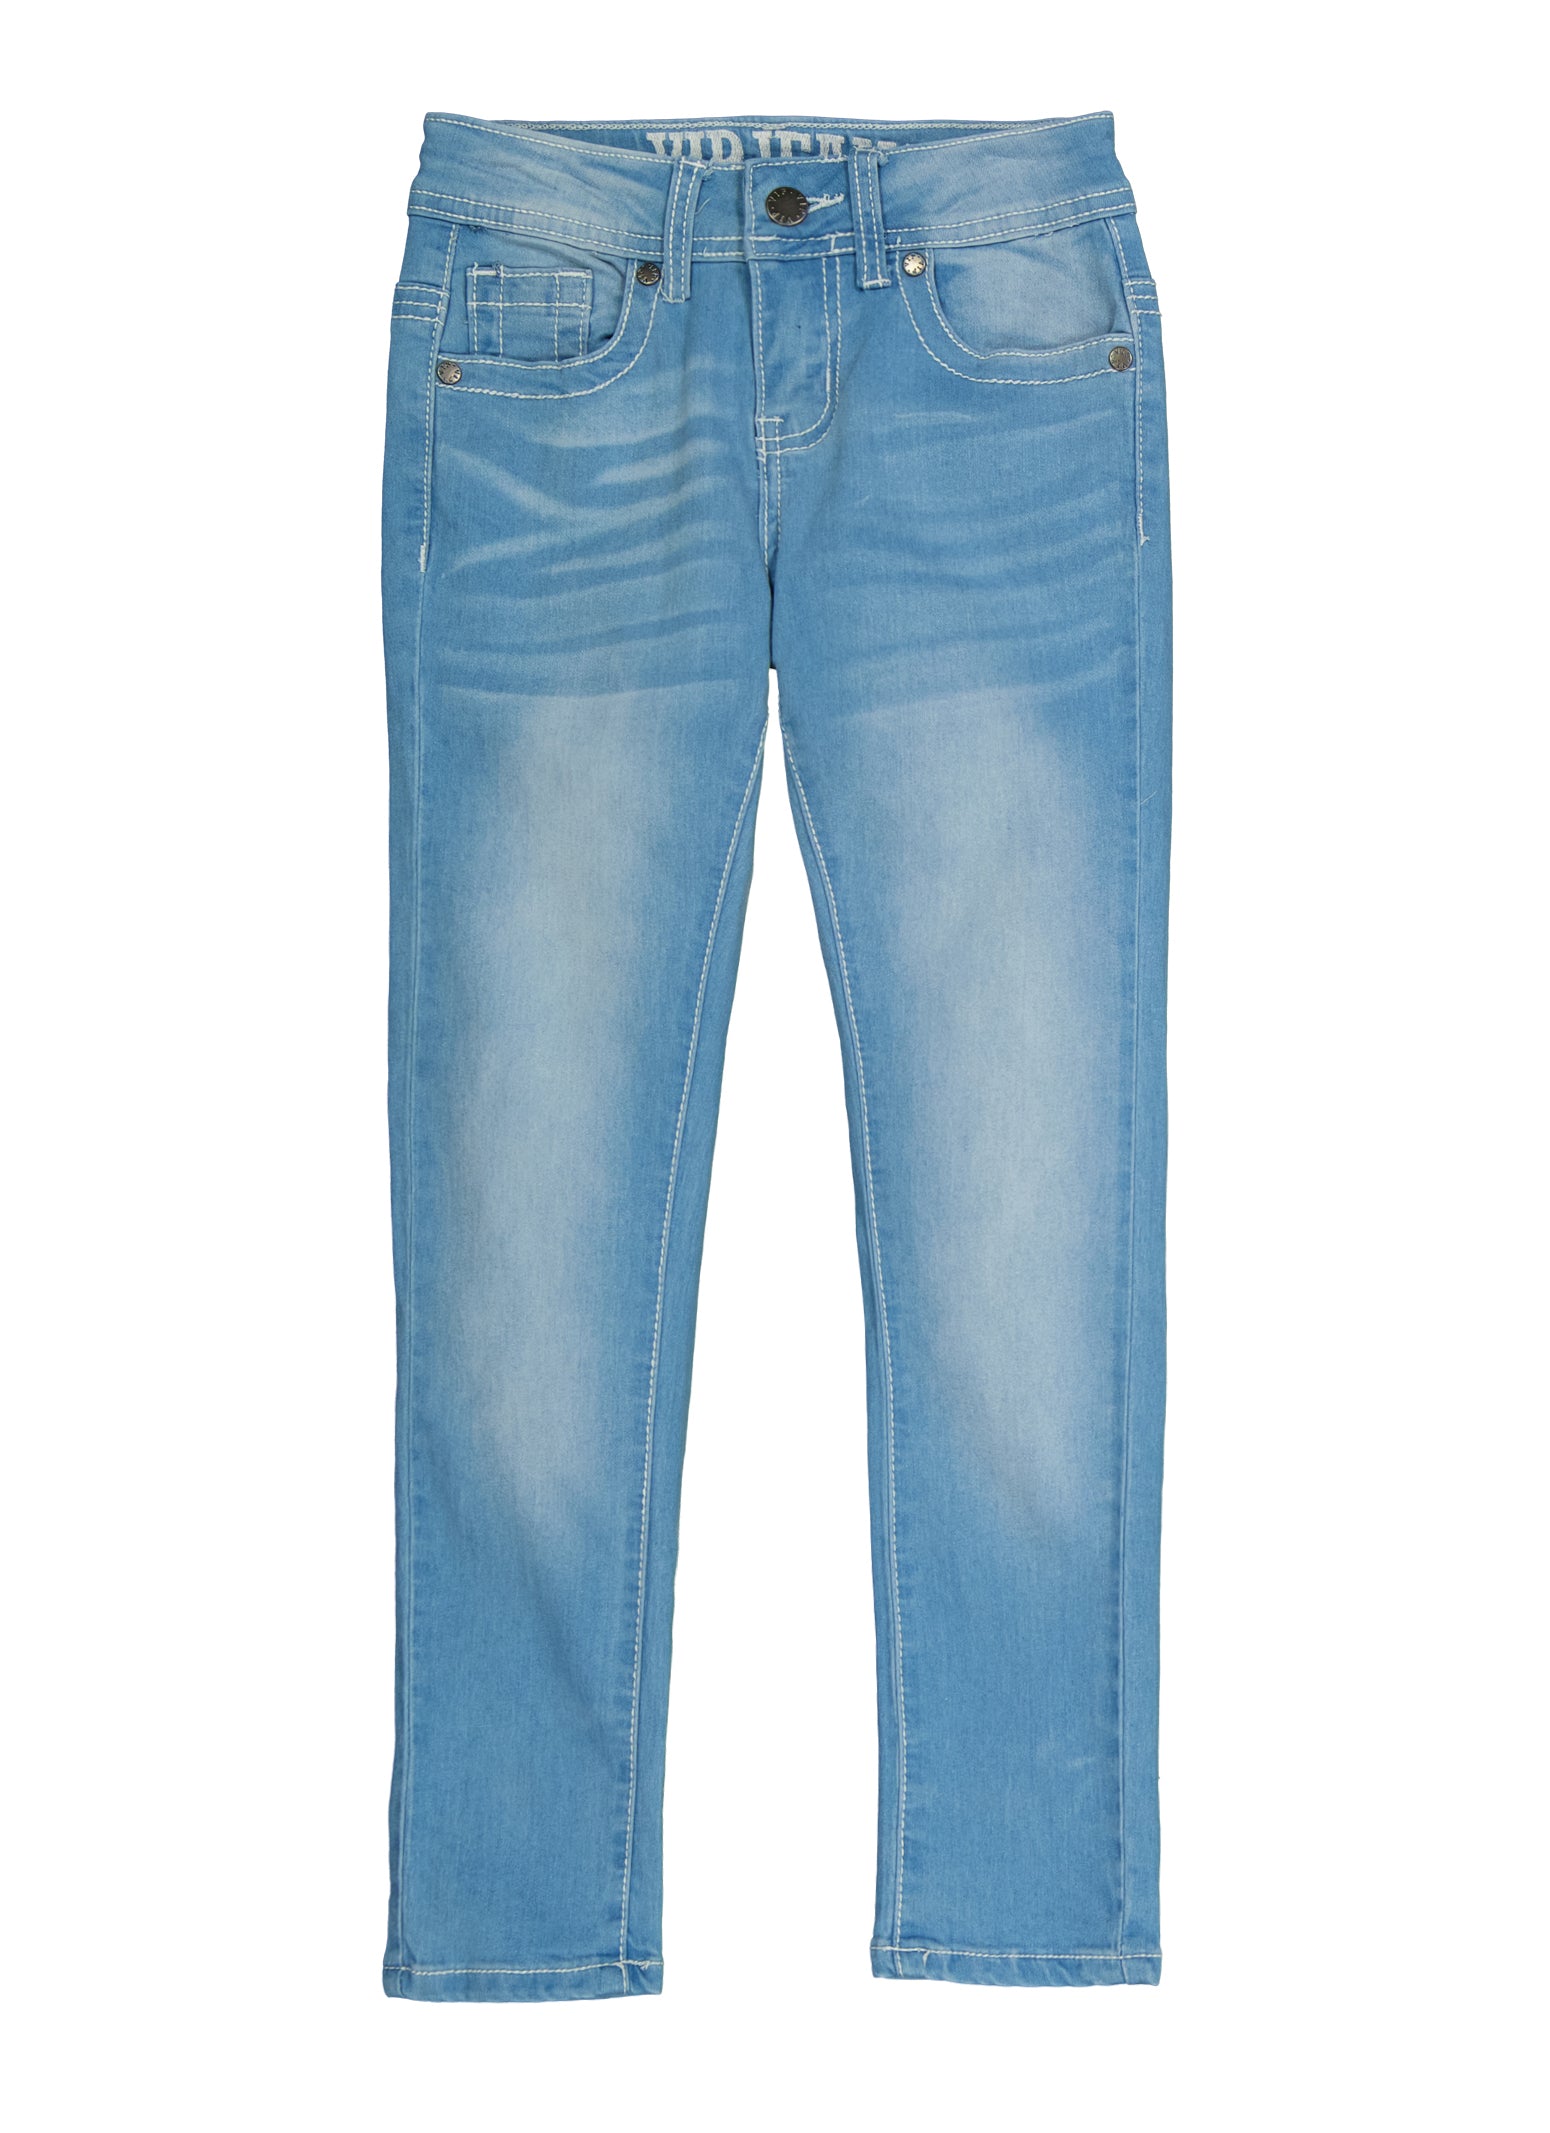 Girls VIP Button Back Pocket Whiskered Jeans, Blue, Size 14